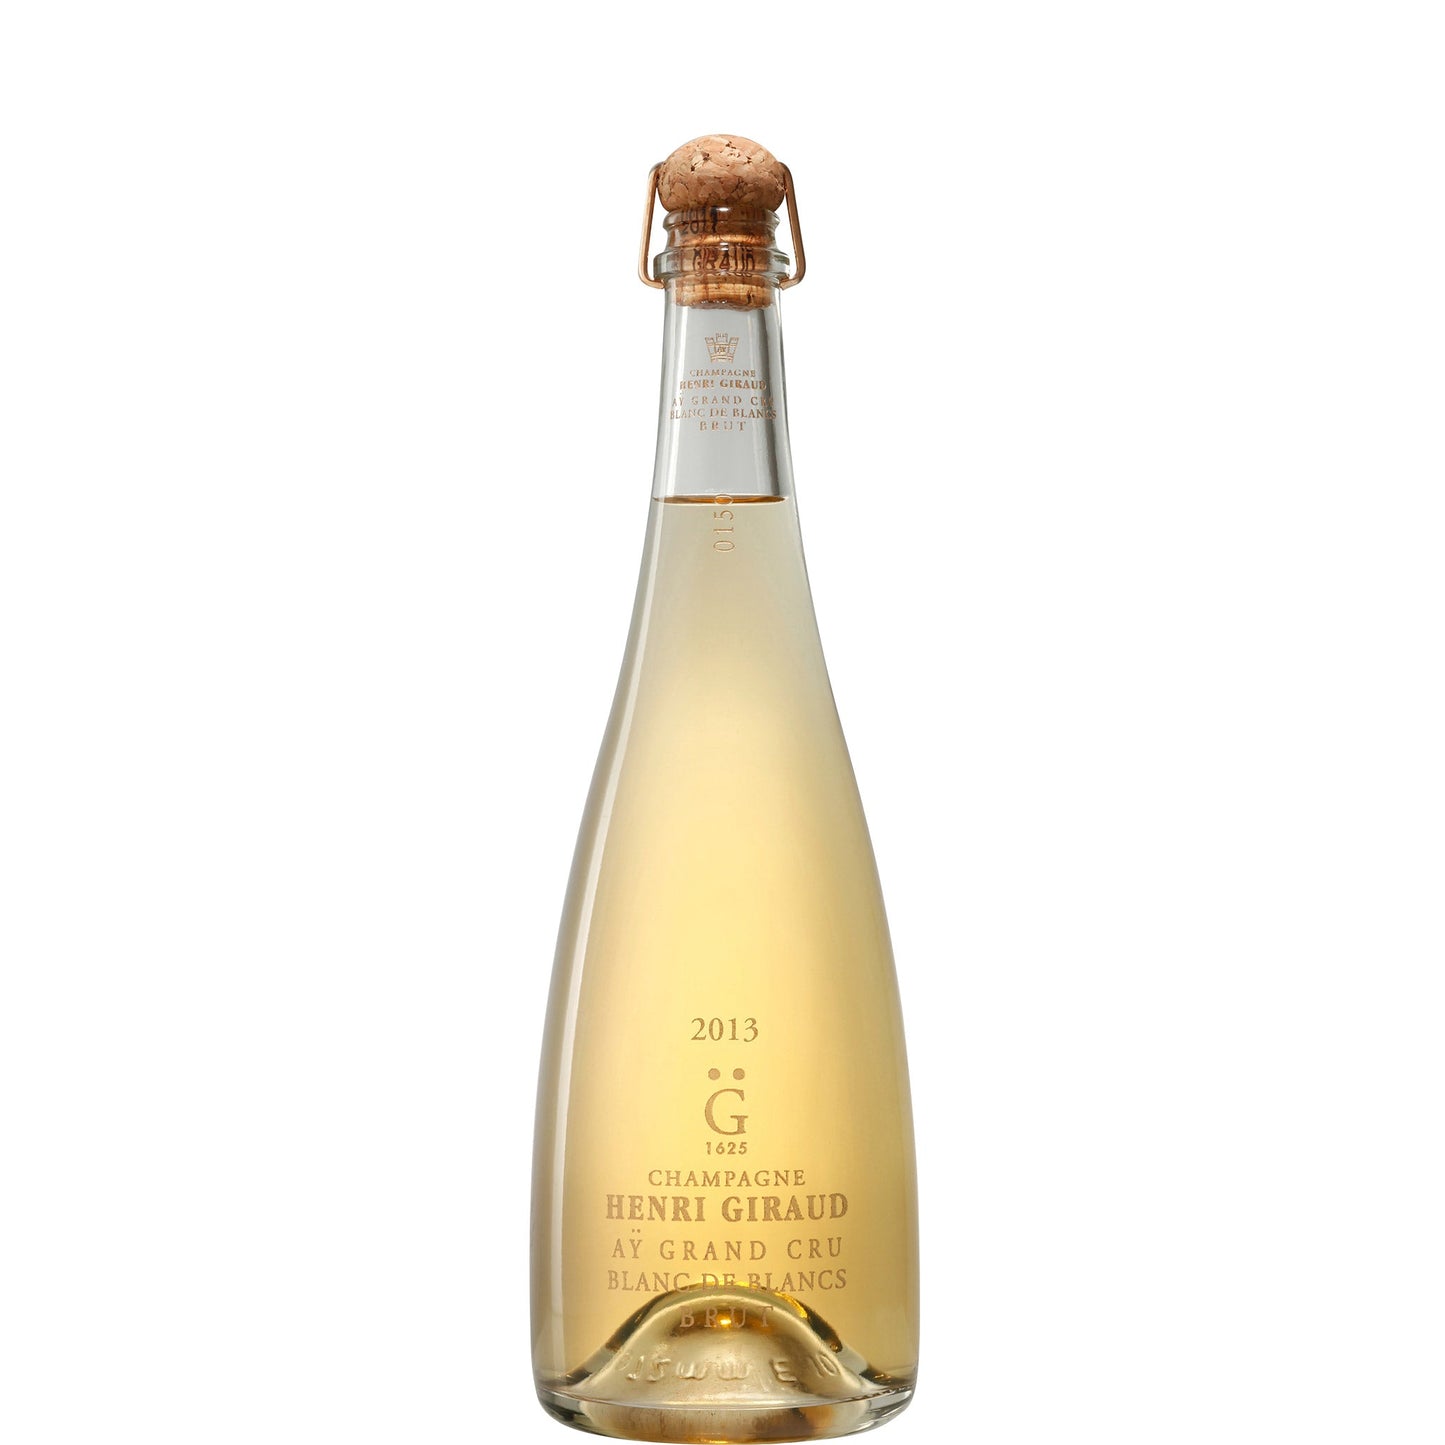 Champagne Henri Giraud, Blanc De Blancs Aÿ Grand Cru, 2013